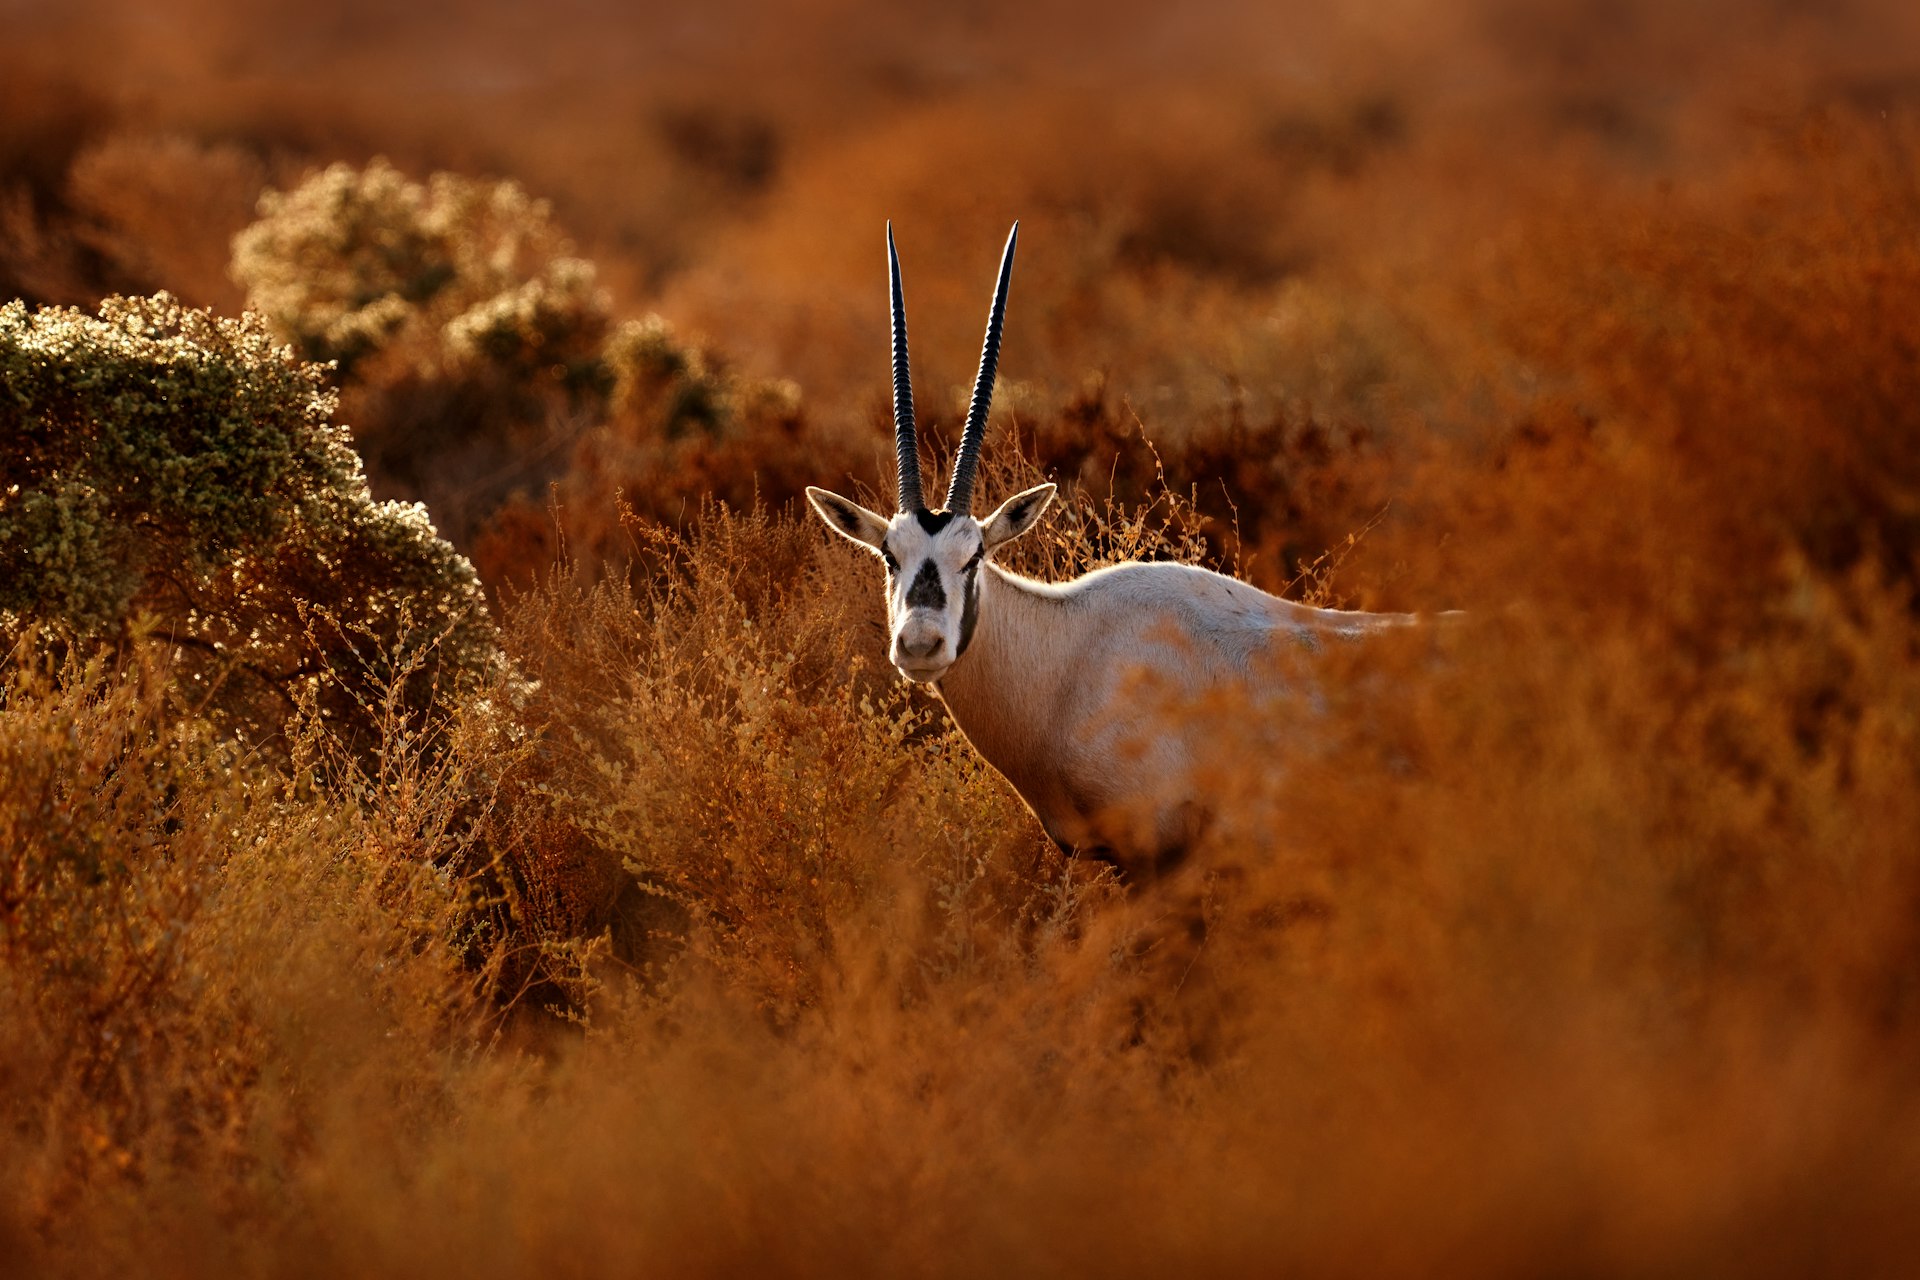 An Arabian oryx peers through the grasses in the Shaumari Wildlife Reserve